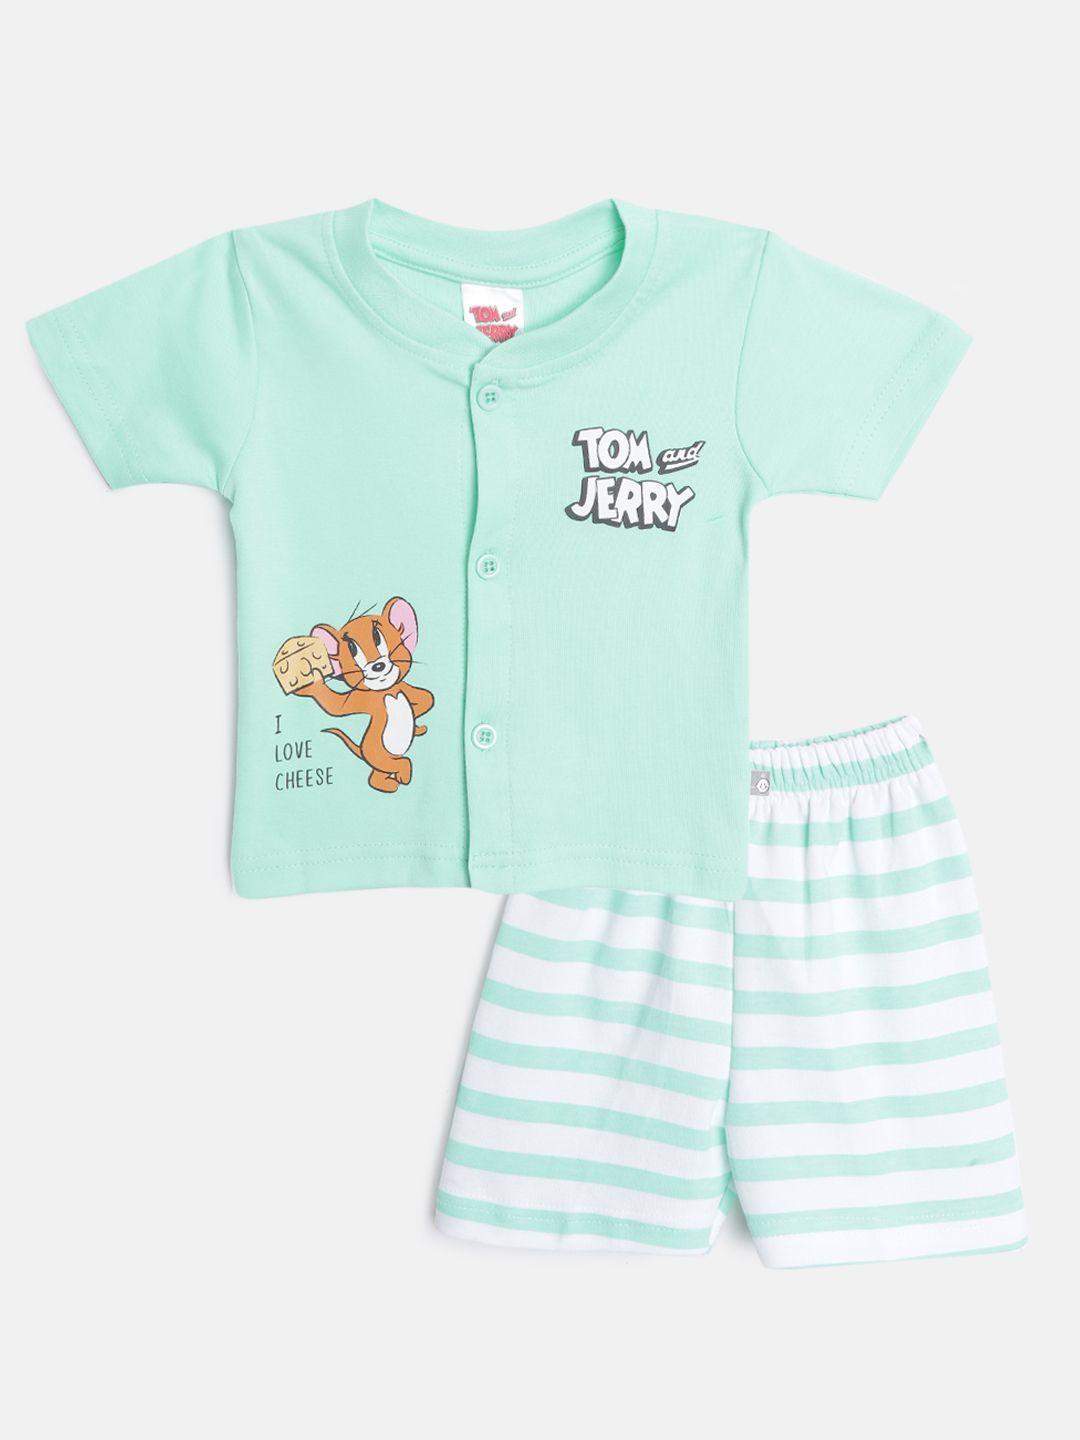 tinyo infant green & white tom & jerry printed cotton clothing set